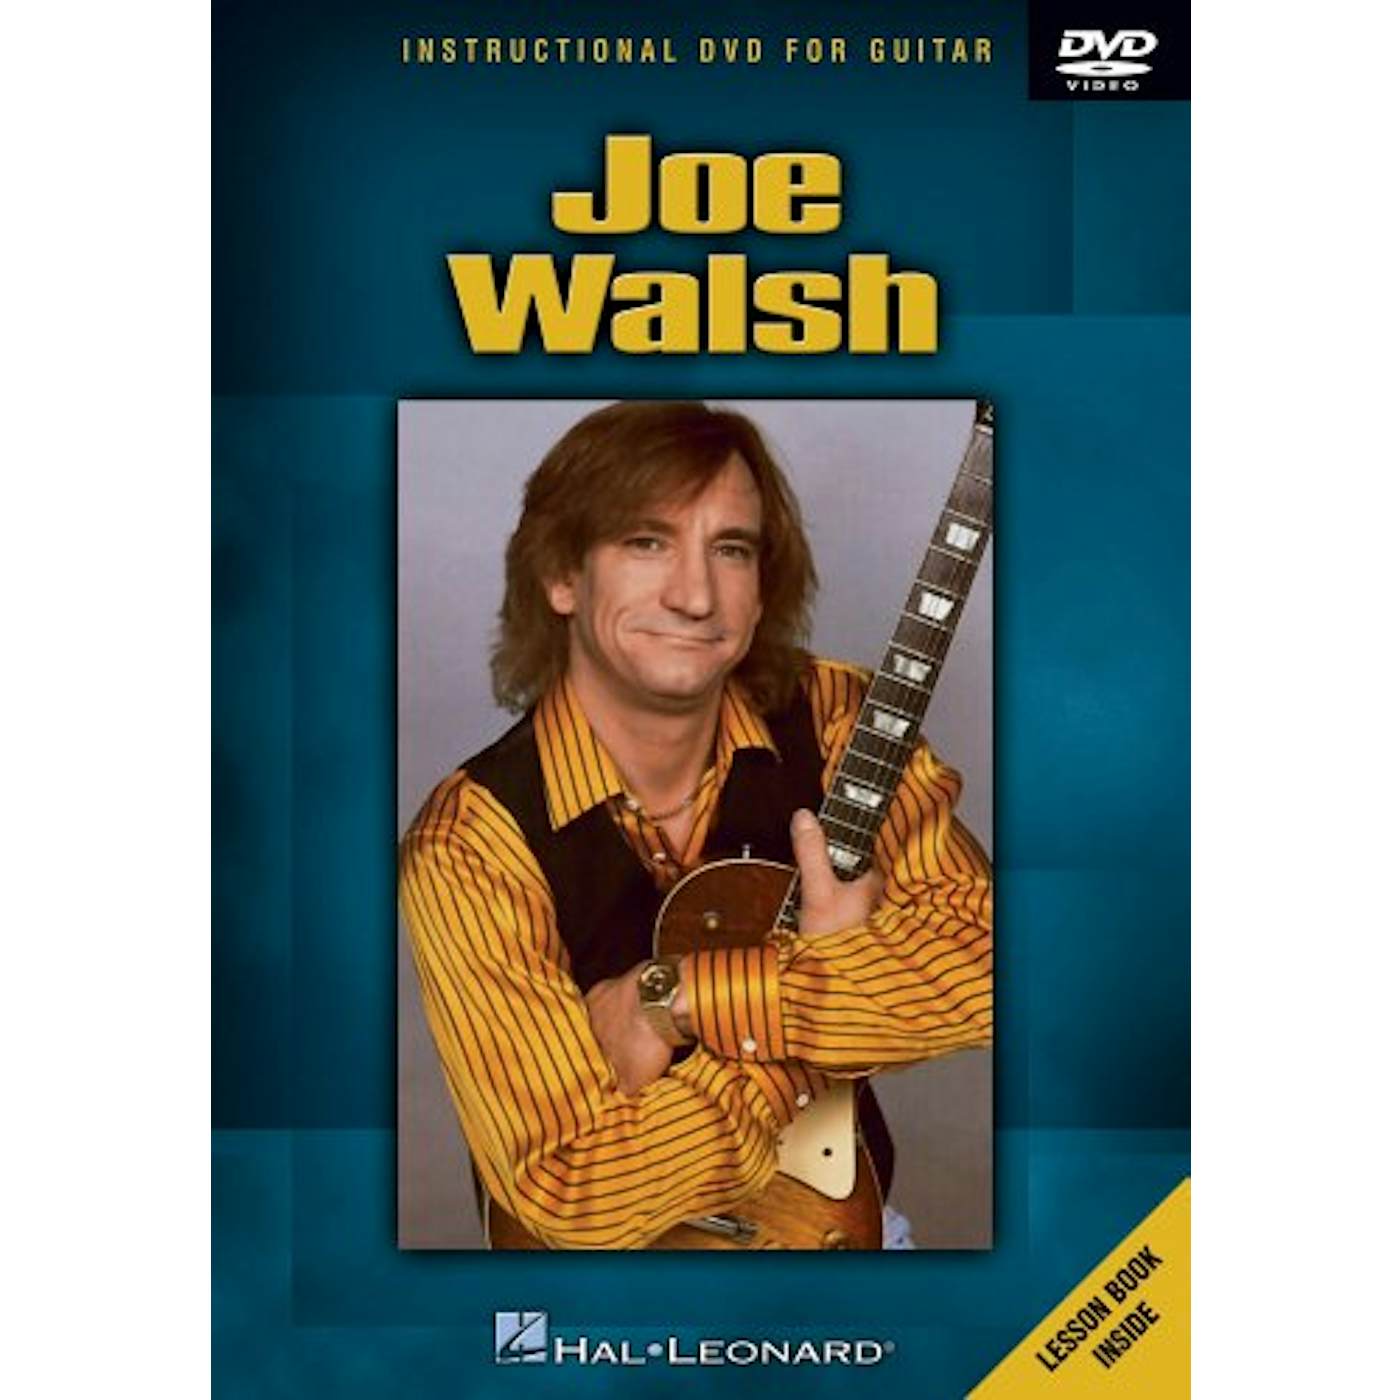 Joe Walsh INSTRUCTIONAL DVD FOR GUITAR DVD